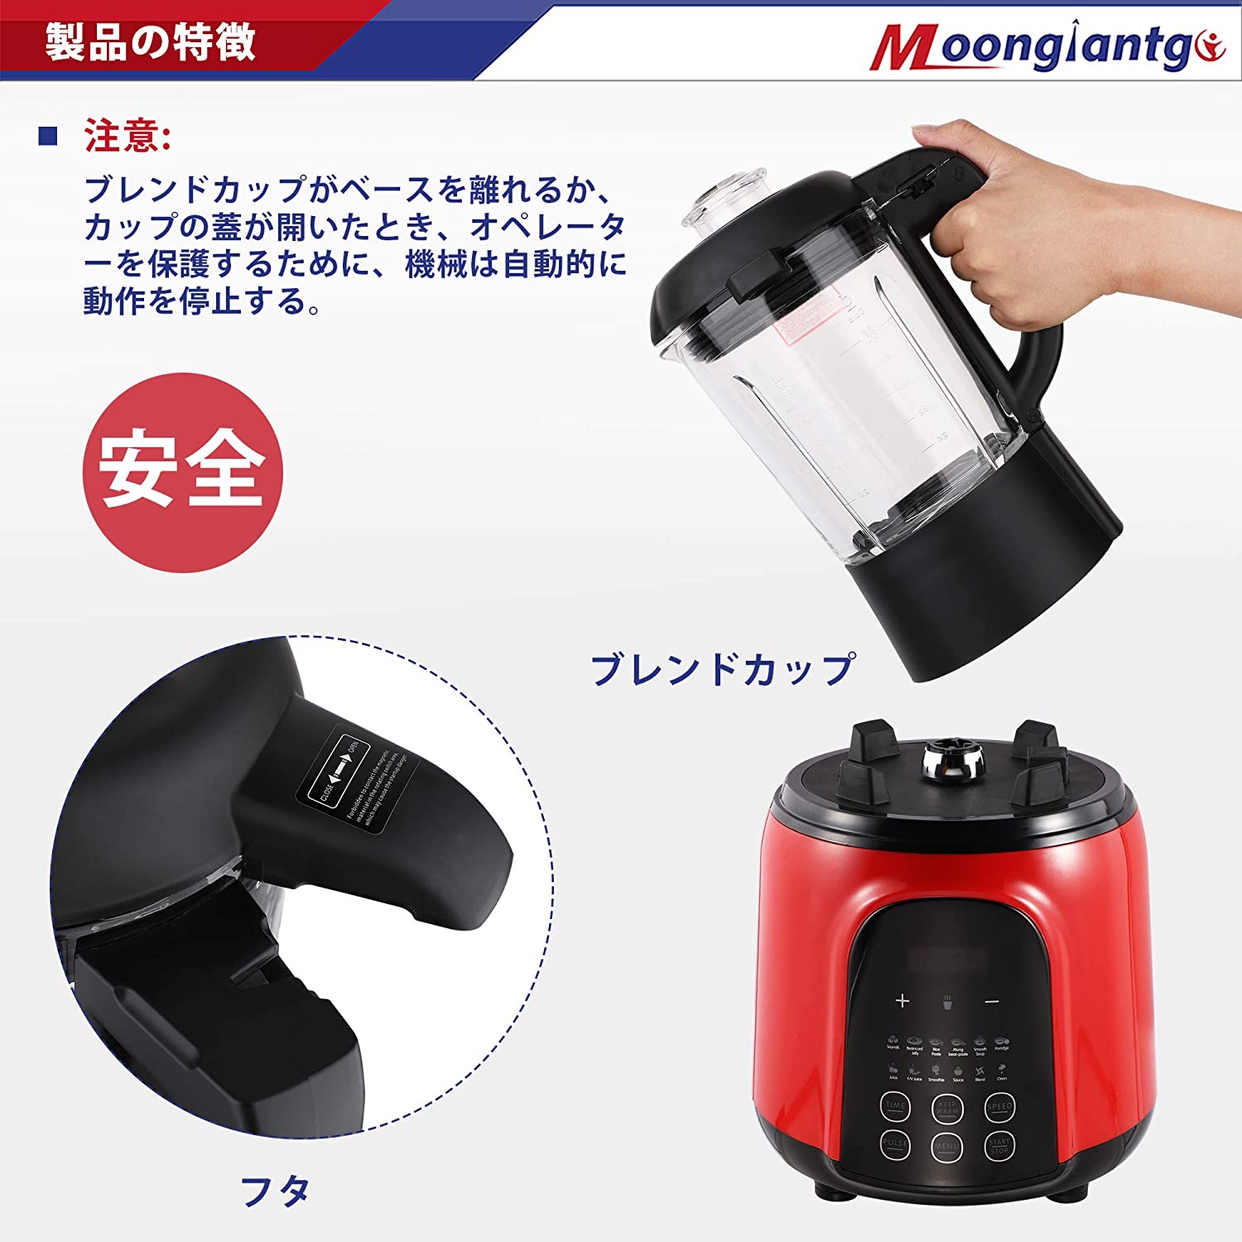 Moongiantgo(ムーンジャイアントゴー) 豆乳機 多機能調理器の商品画像サムネ5 